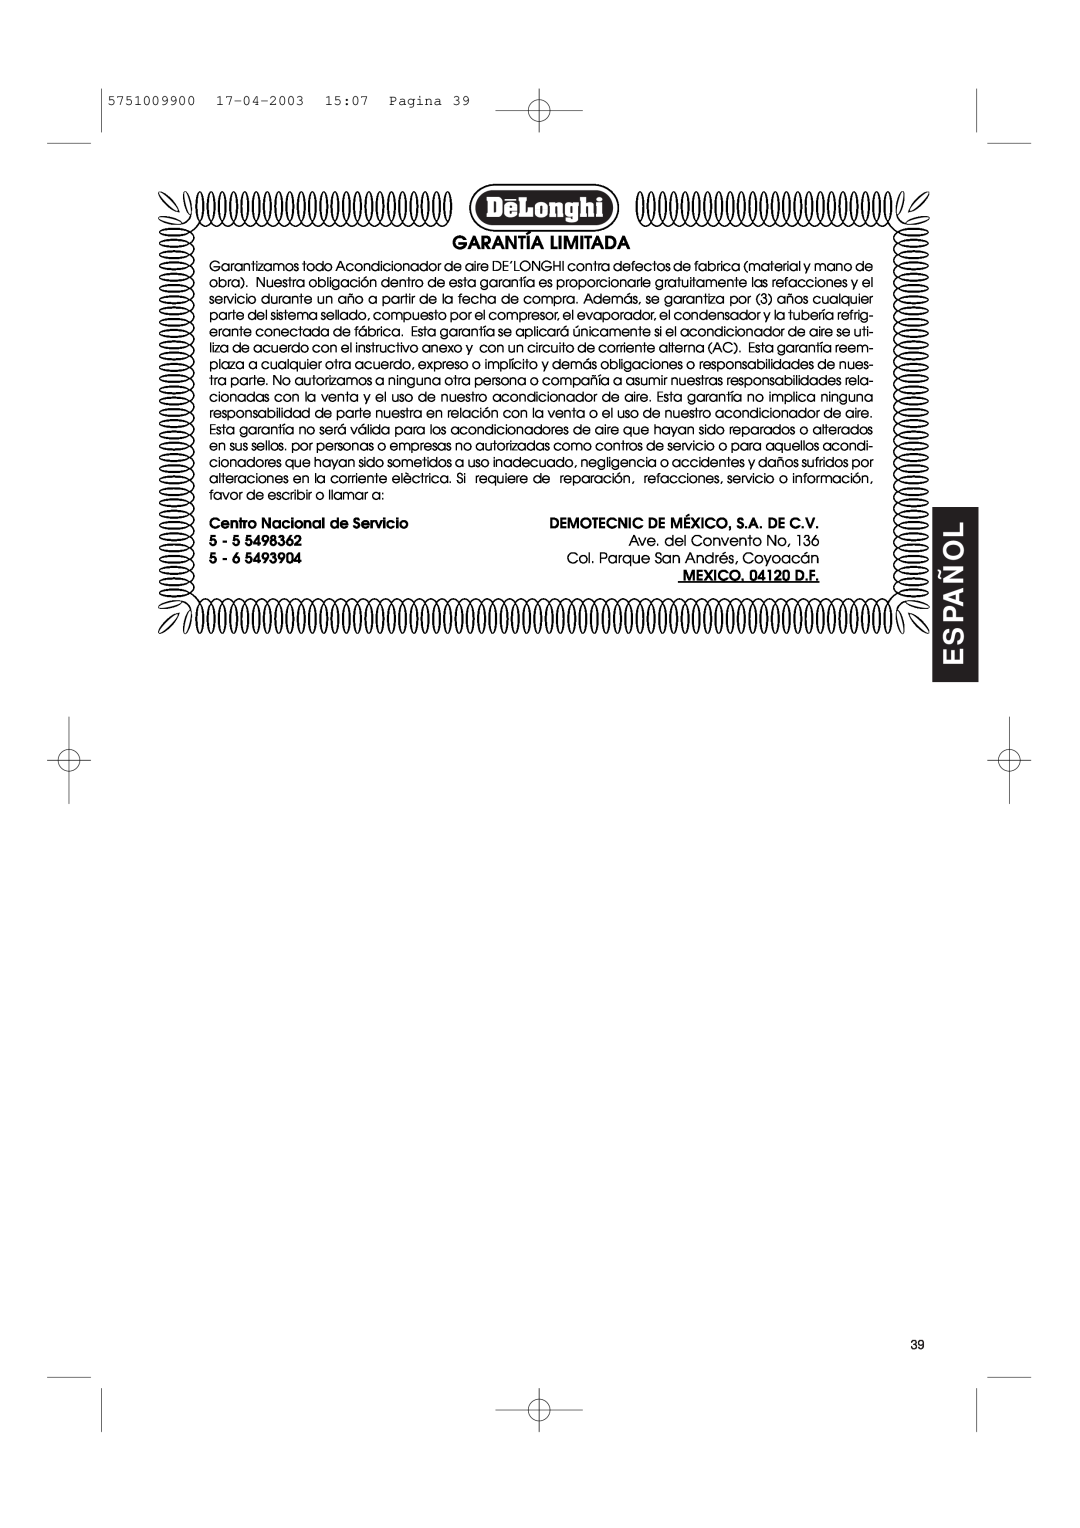 DeLonghi Pac 1000 manual Español, Garantía Limitada, 5751009900 17-04-200315 07 Pagina, Centro Nacional de Servicio 